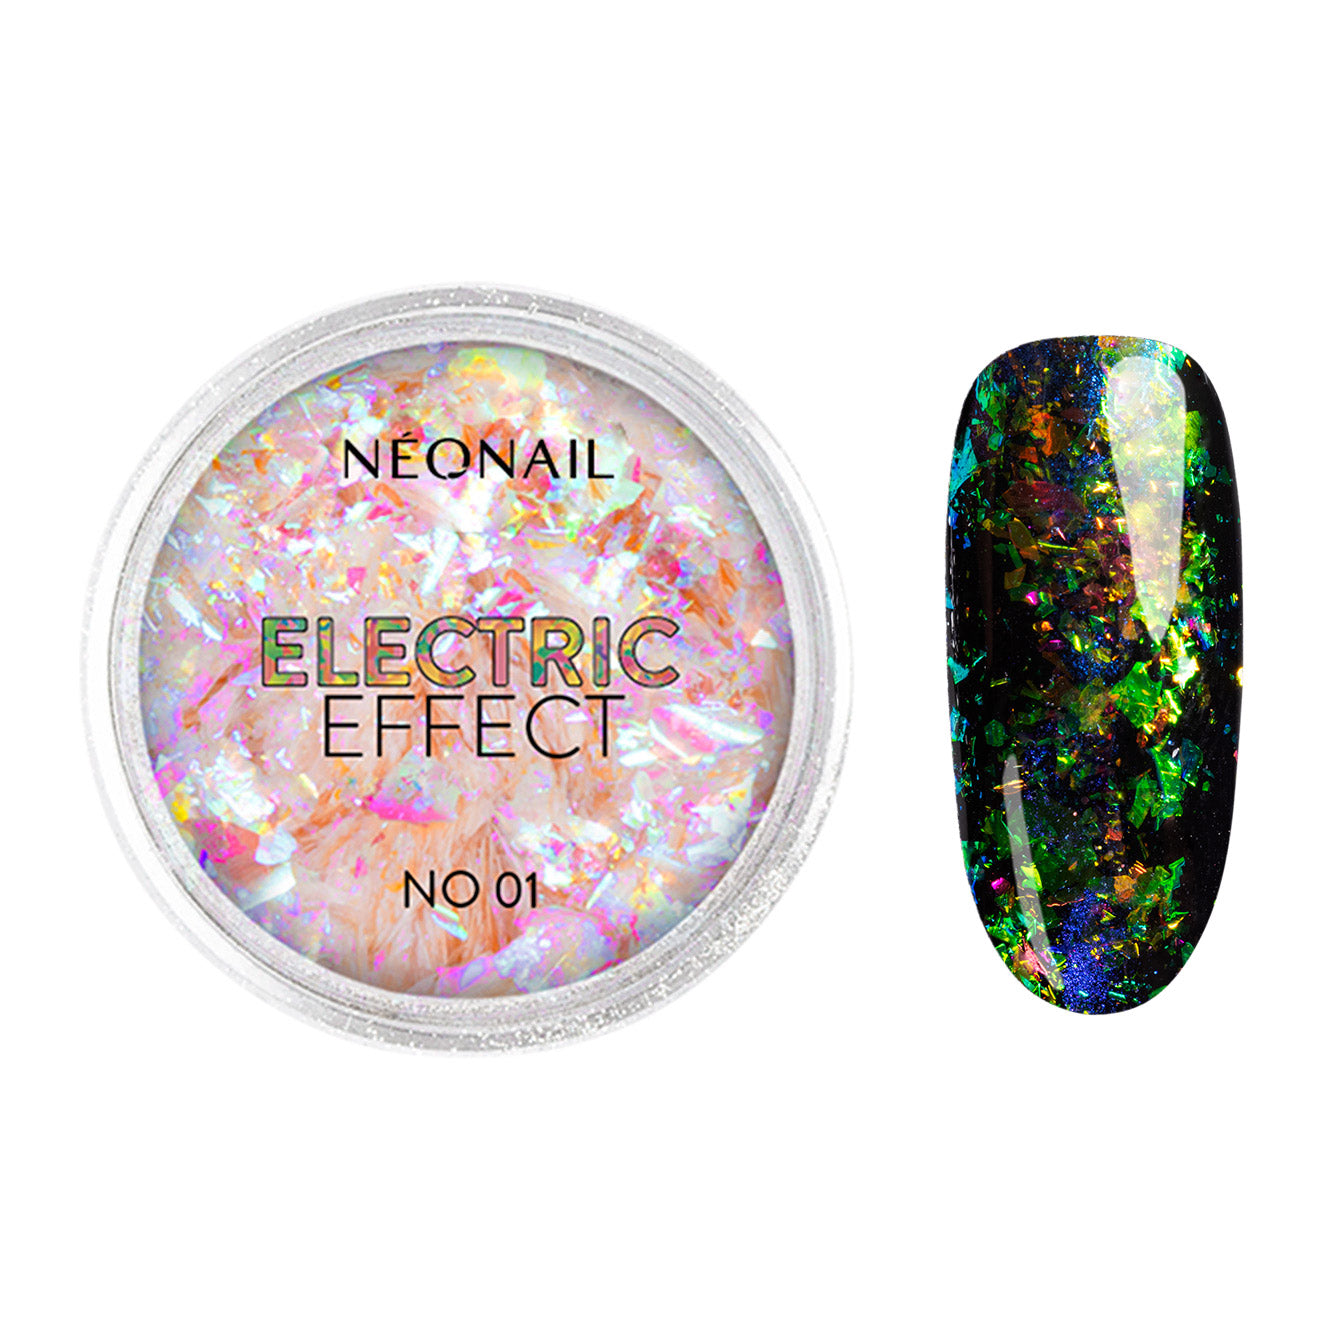 Neglepynt - Electric Effect 01 - 0,3g-Neglepynt-NeoNail-NR Kosmetik